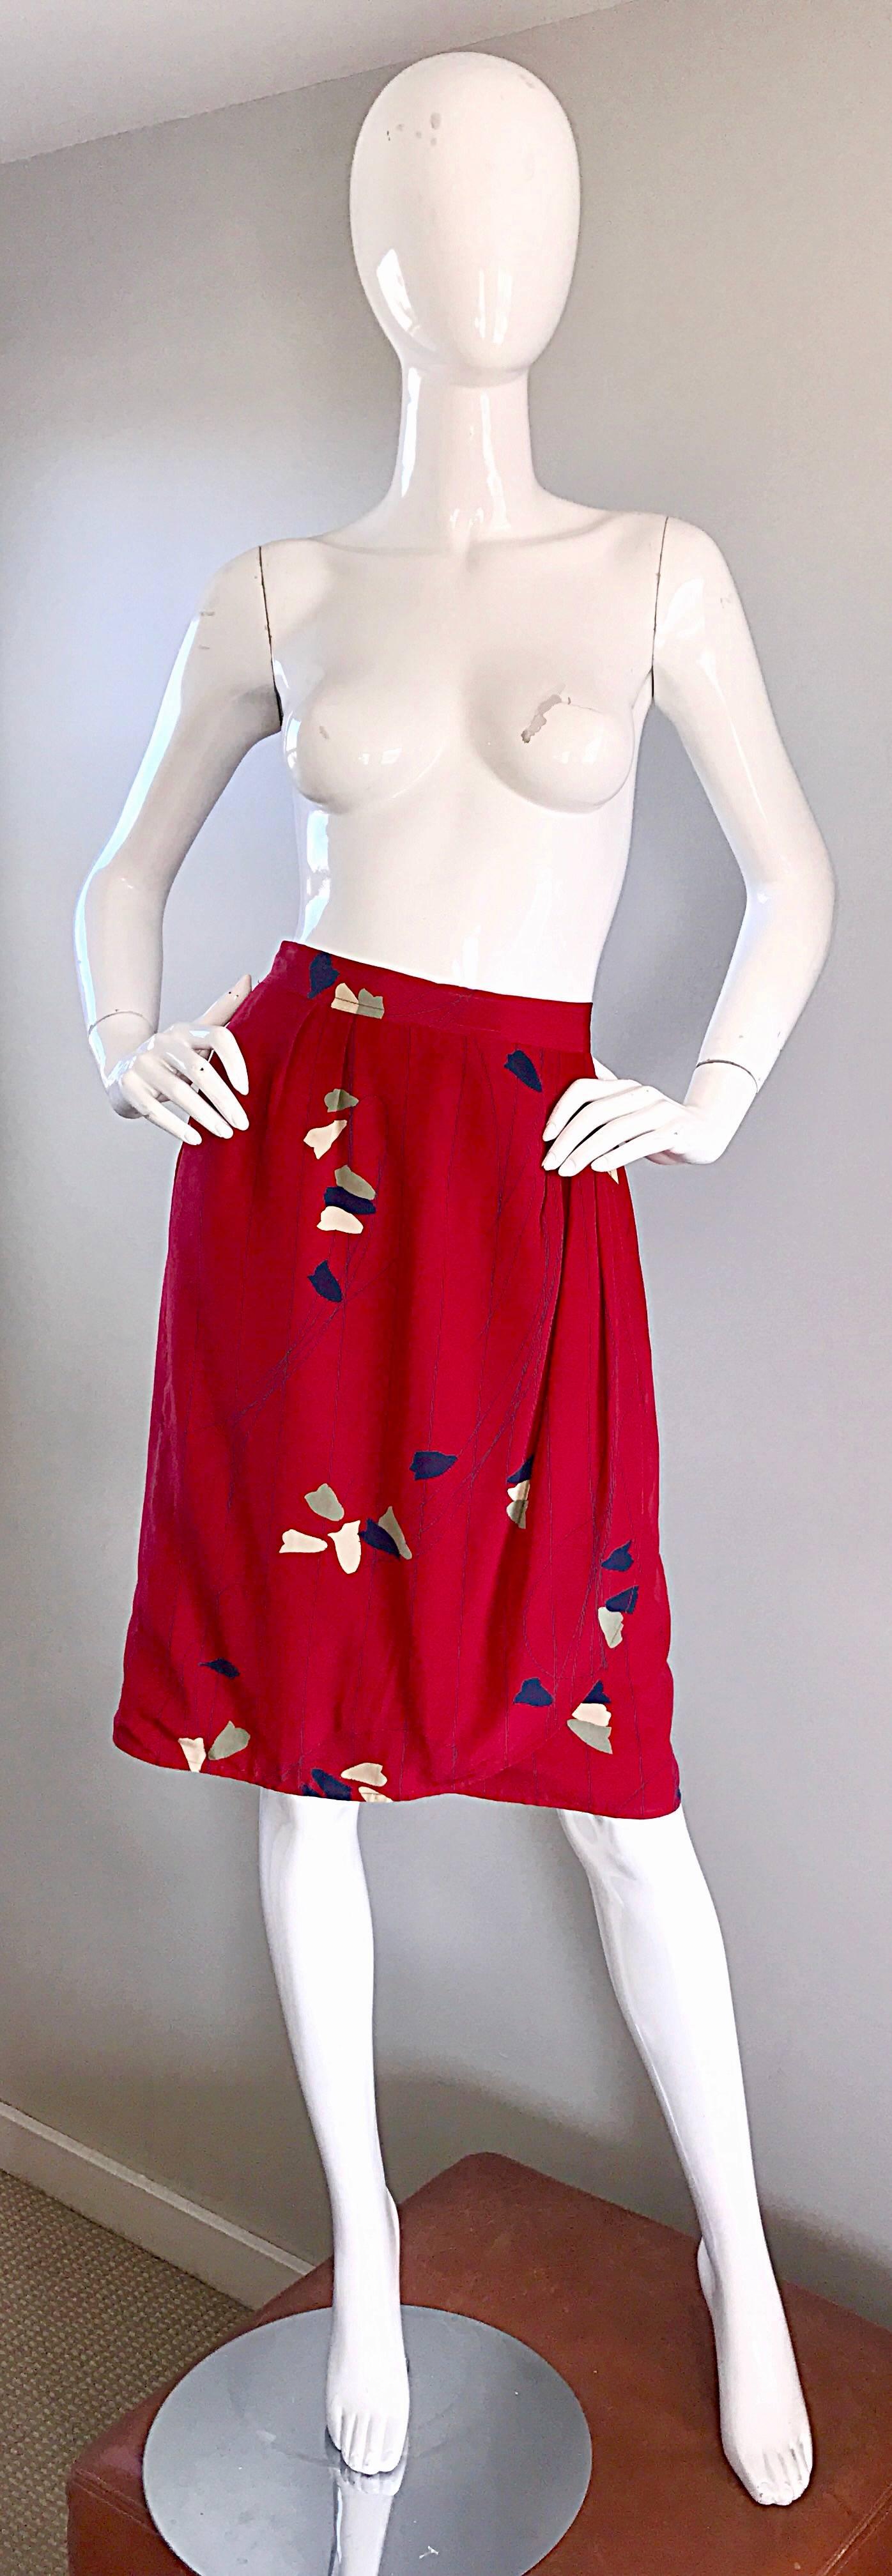 Women's 1970s Alan Austin Italian Red Silk Vintage Blouse and Skirt 70s Dress Ensemble For Sale